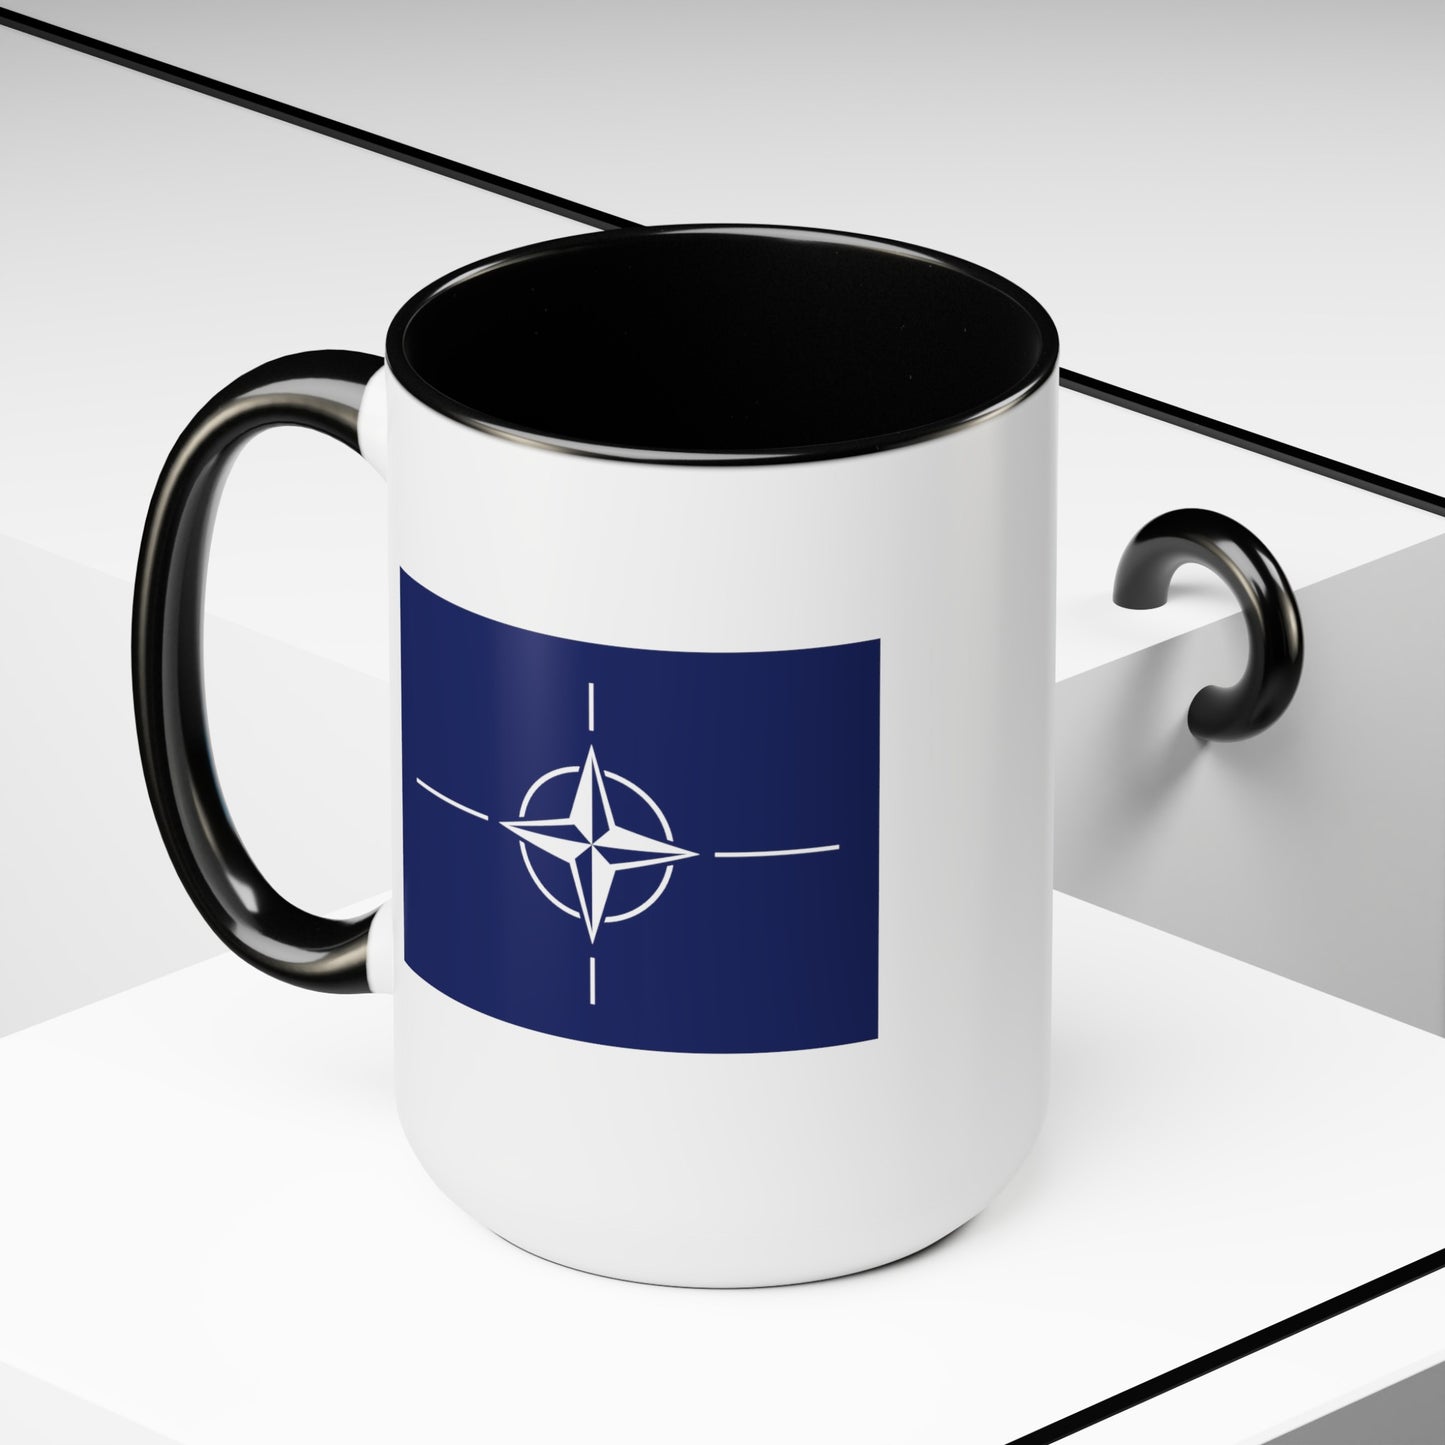 NATO Coffee Mug - Double Sided Black Accent White Ceramic 15oz by TheGlassyLass.com